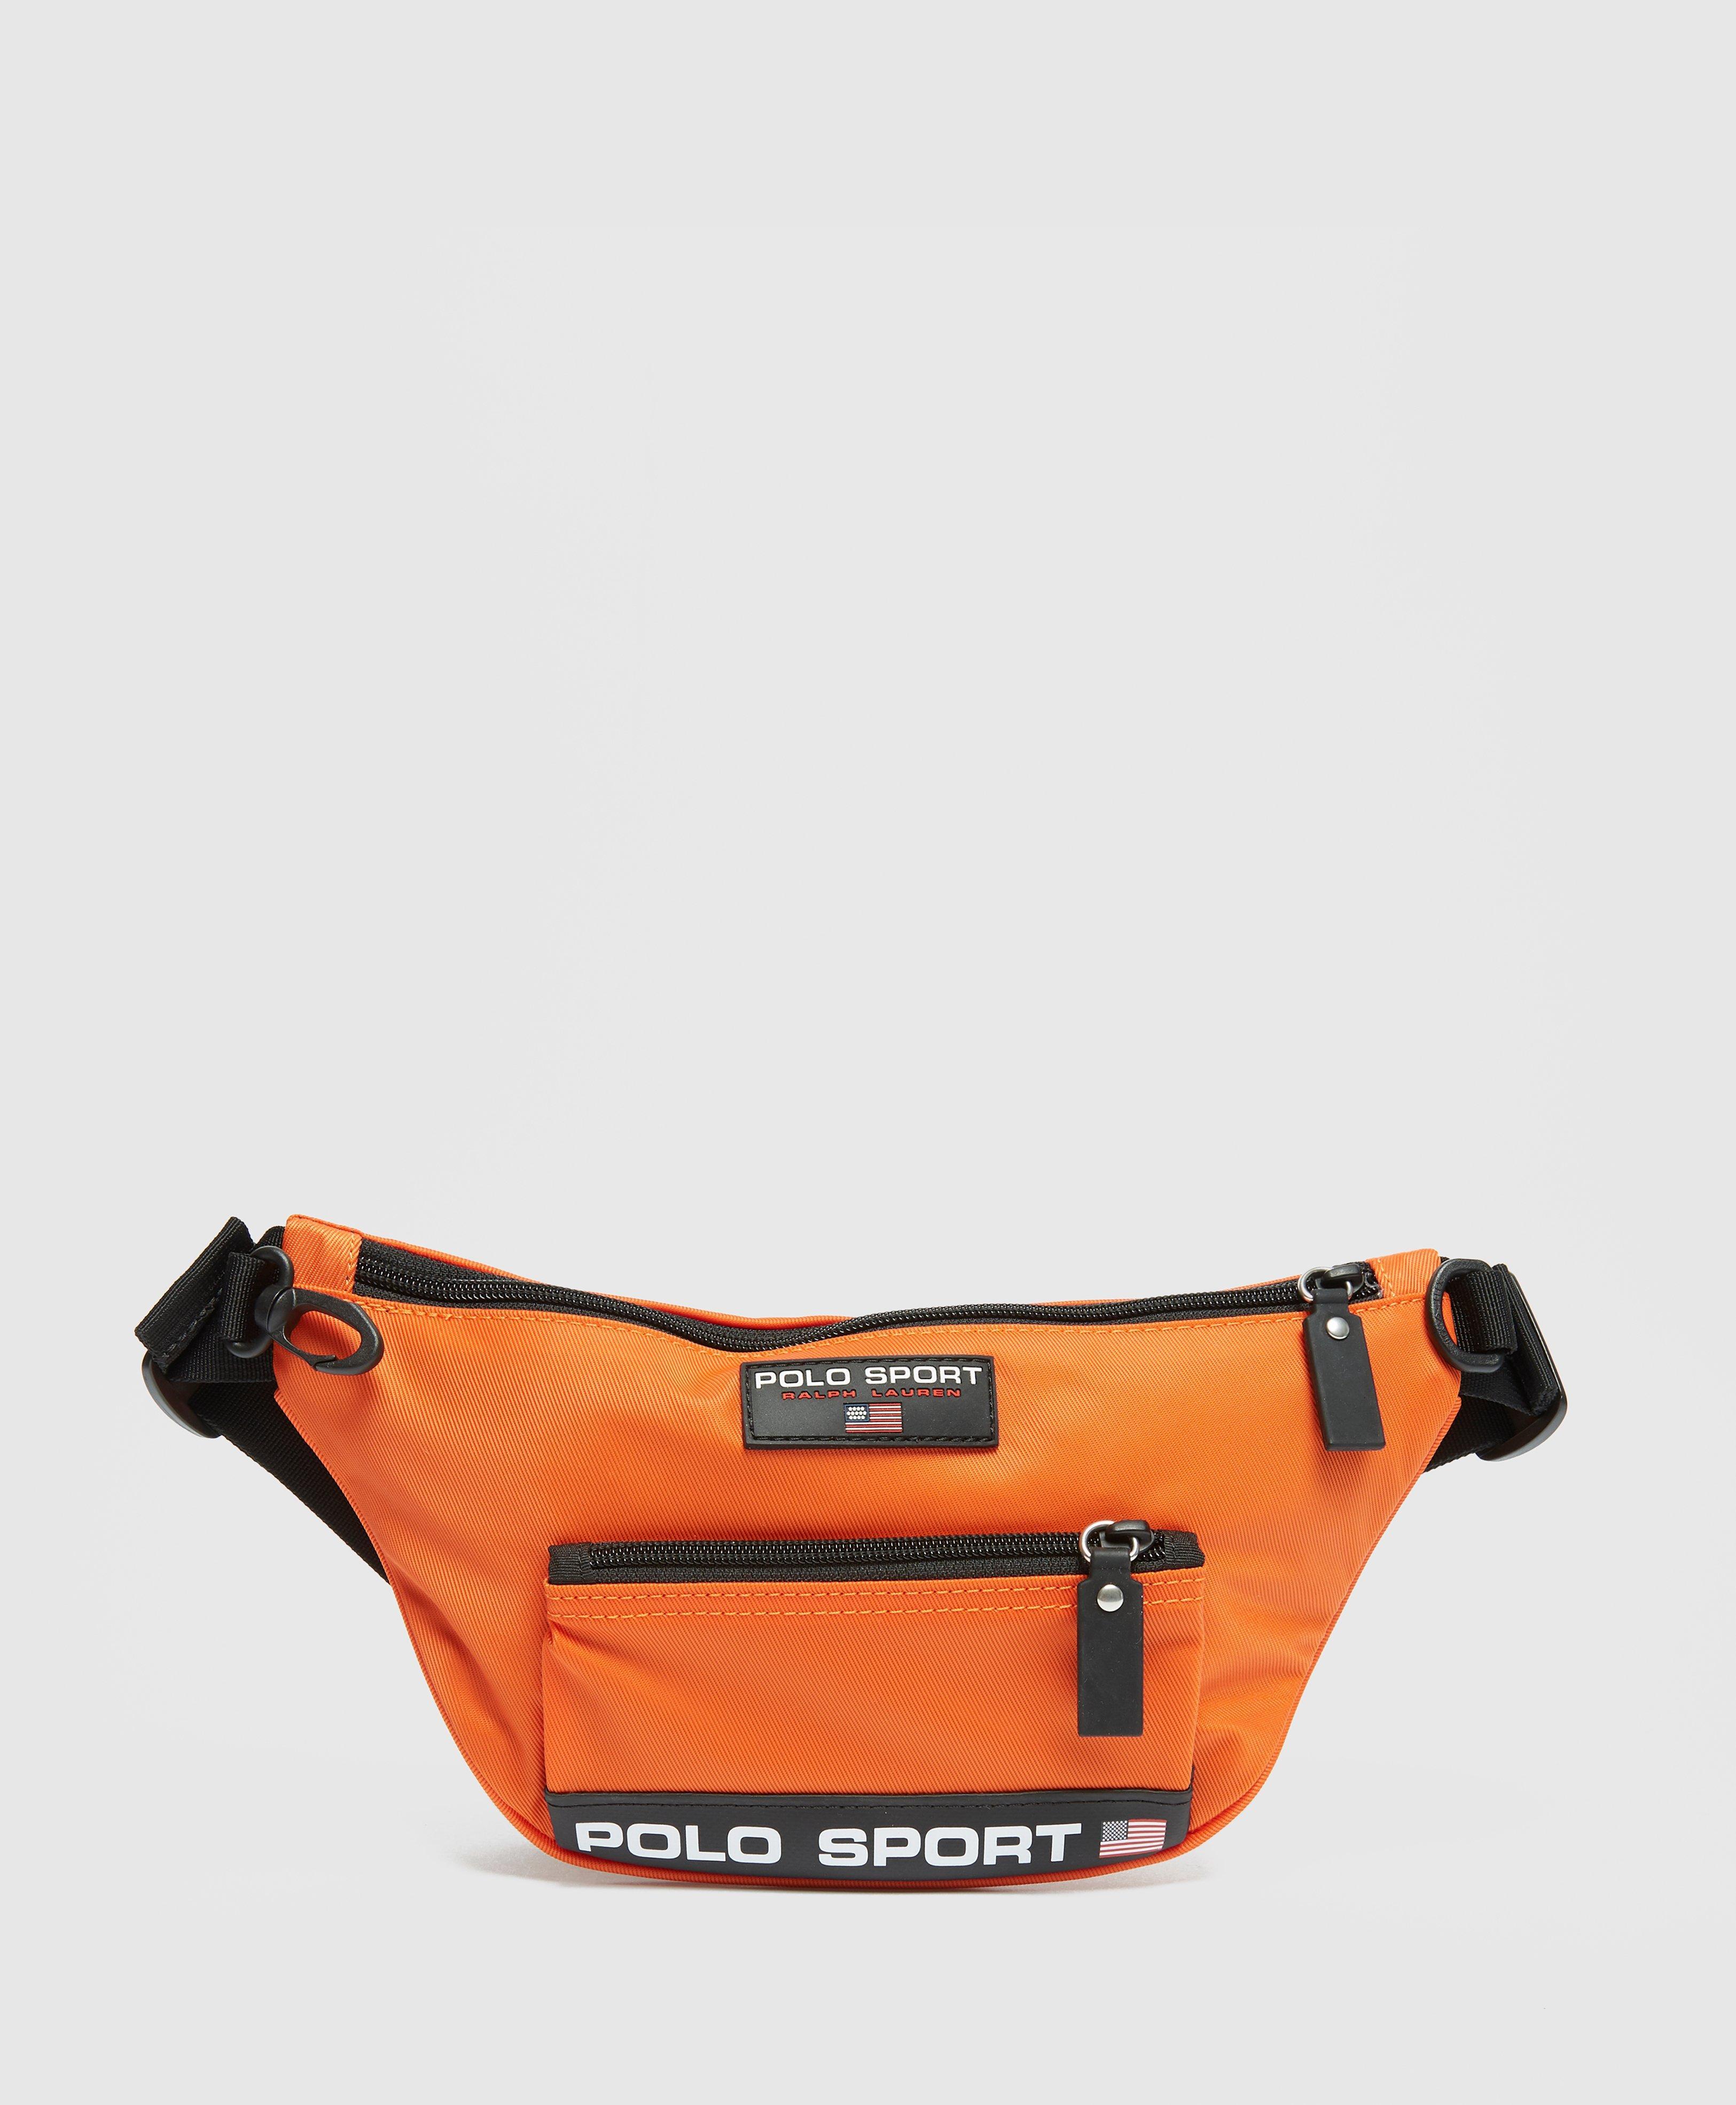 Polo Ralph Lauren Sport Logo Bum Bag in Orange for Men - Lyst